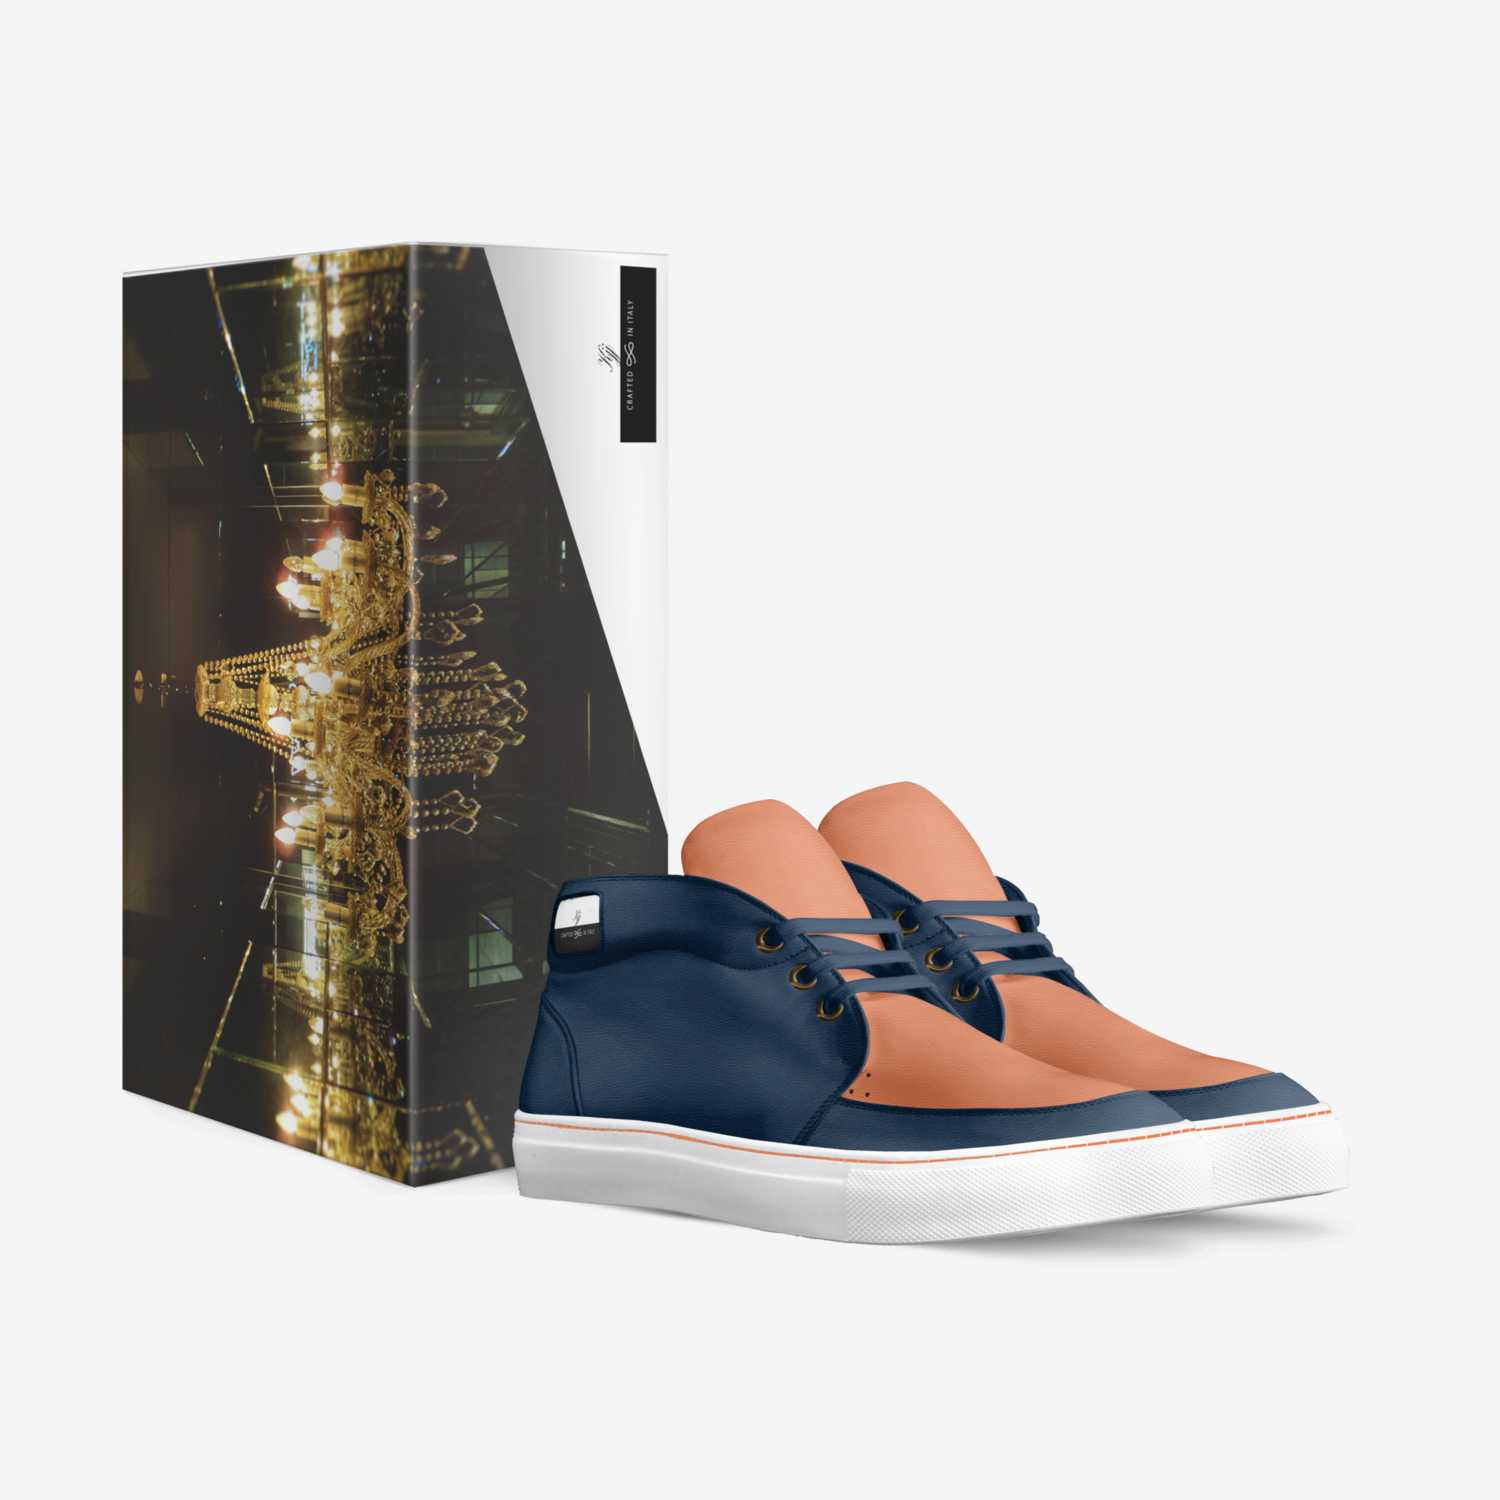 Kjj  custom made in Italy shoes by Lakeesha Sorrell | Box view